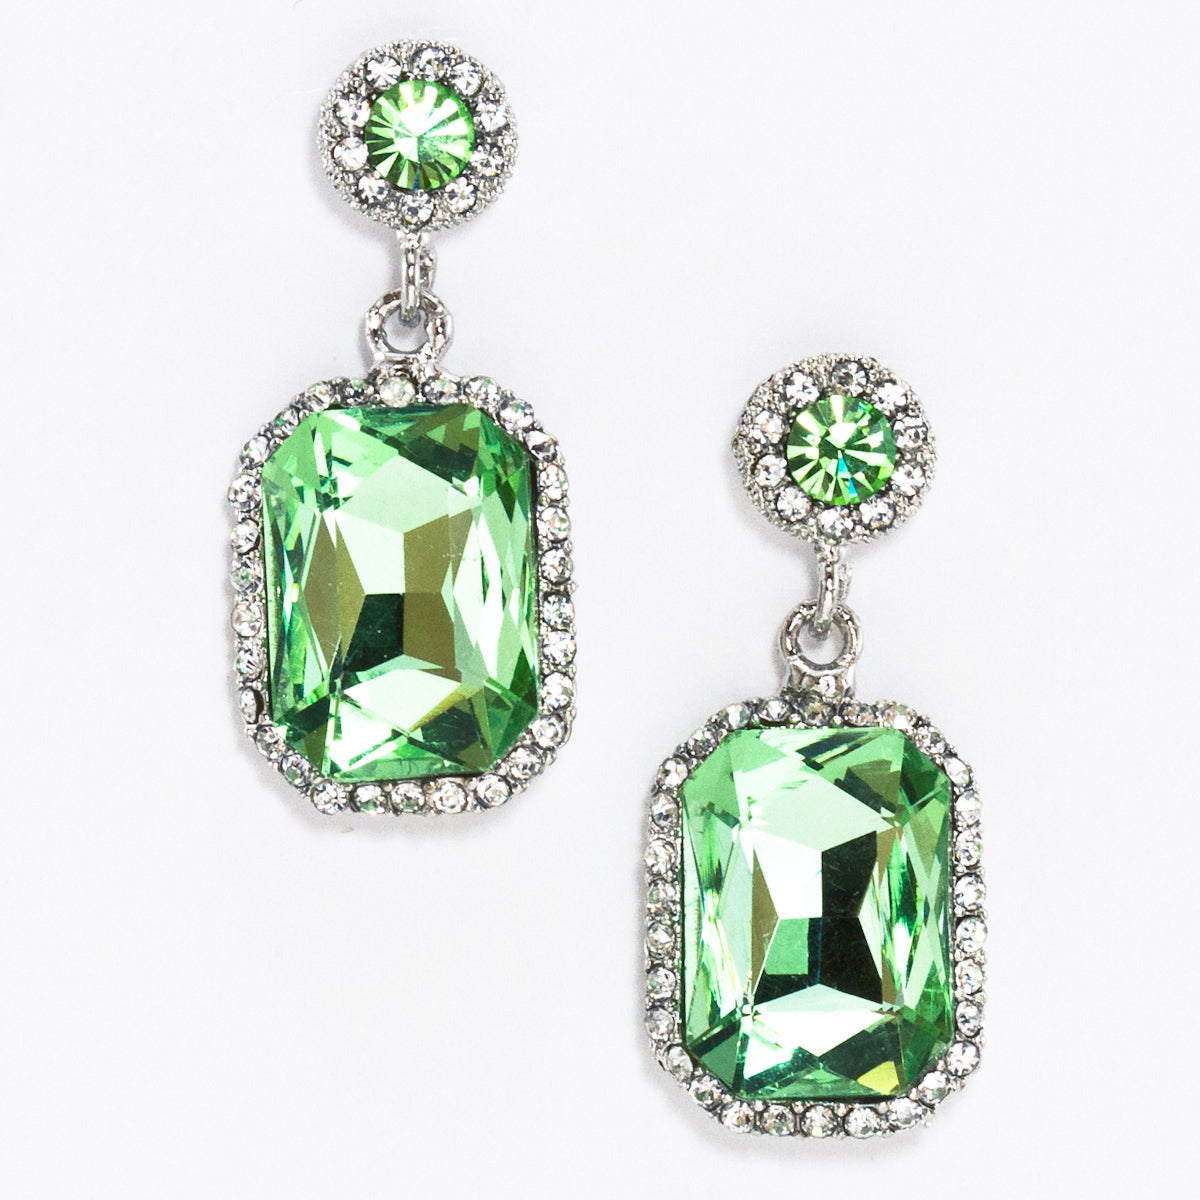 Emerald Earrings, May Birthstone Earrings, Handmade Silver Green Cryst